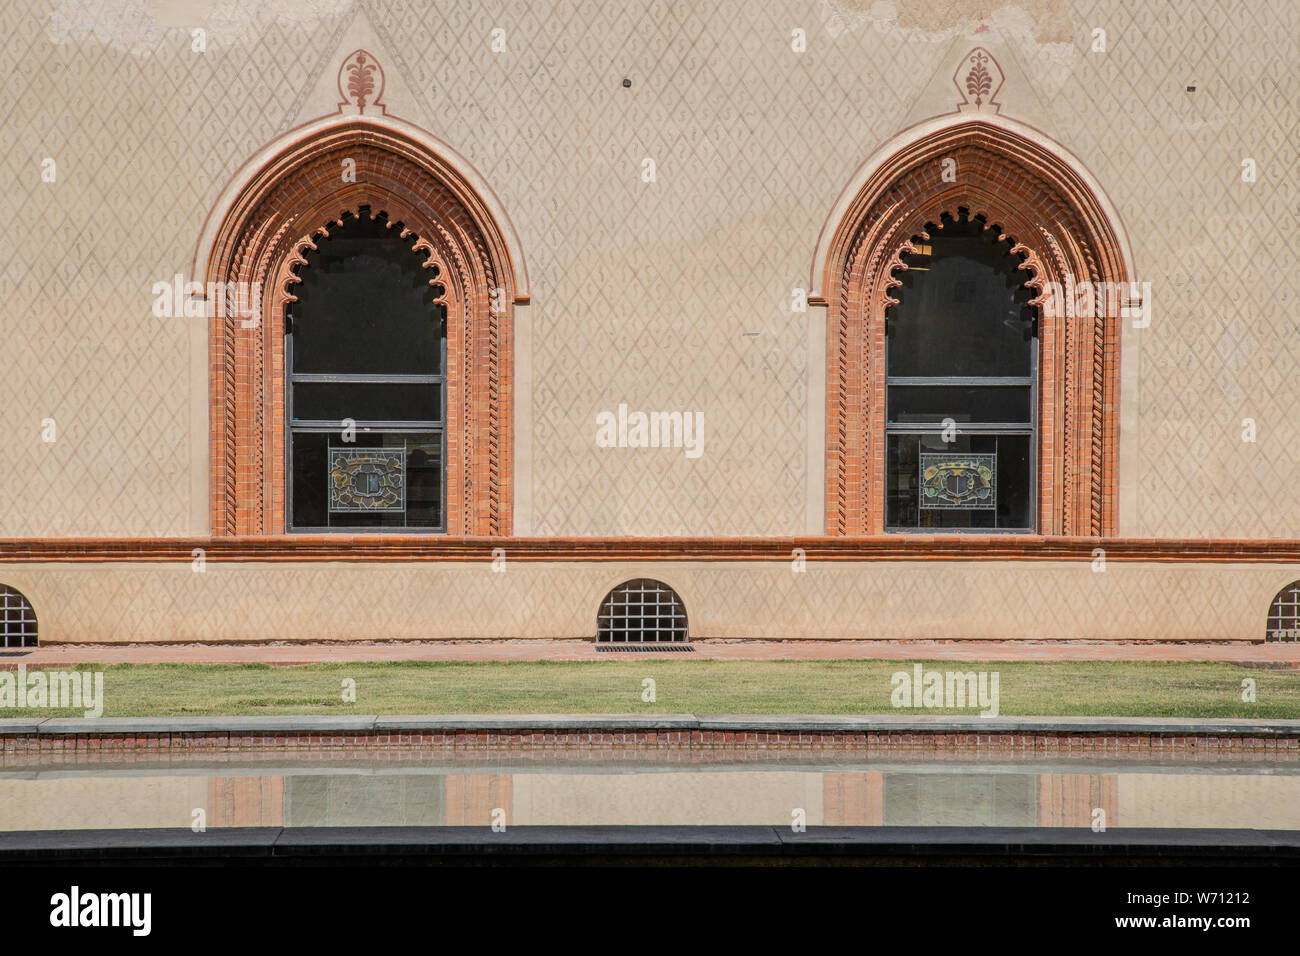 Mailand, Italien - 30. Juni 2019: Blick auf das Schloss der Sforza - Castello Sforzesco Stockfoto